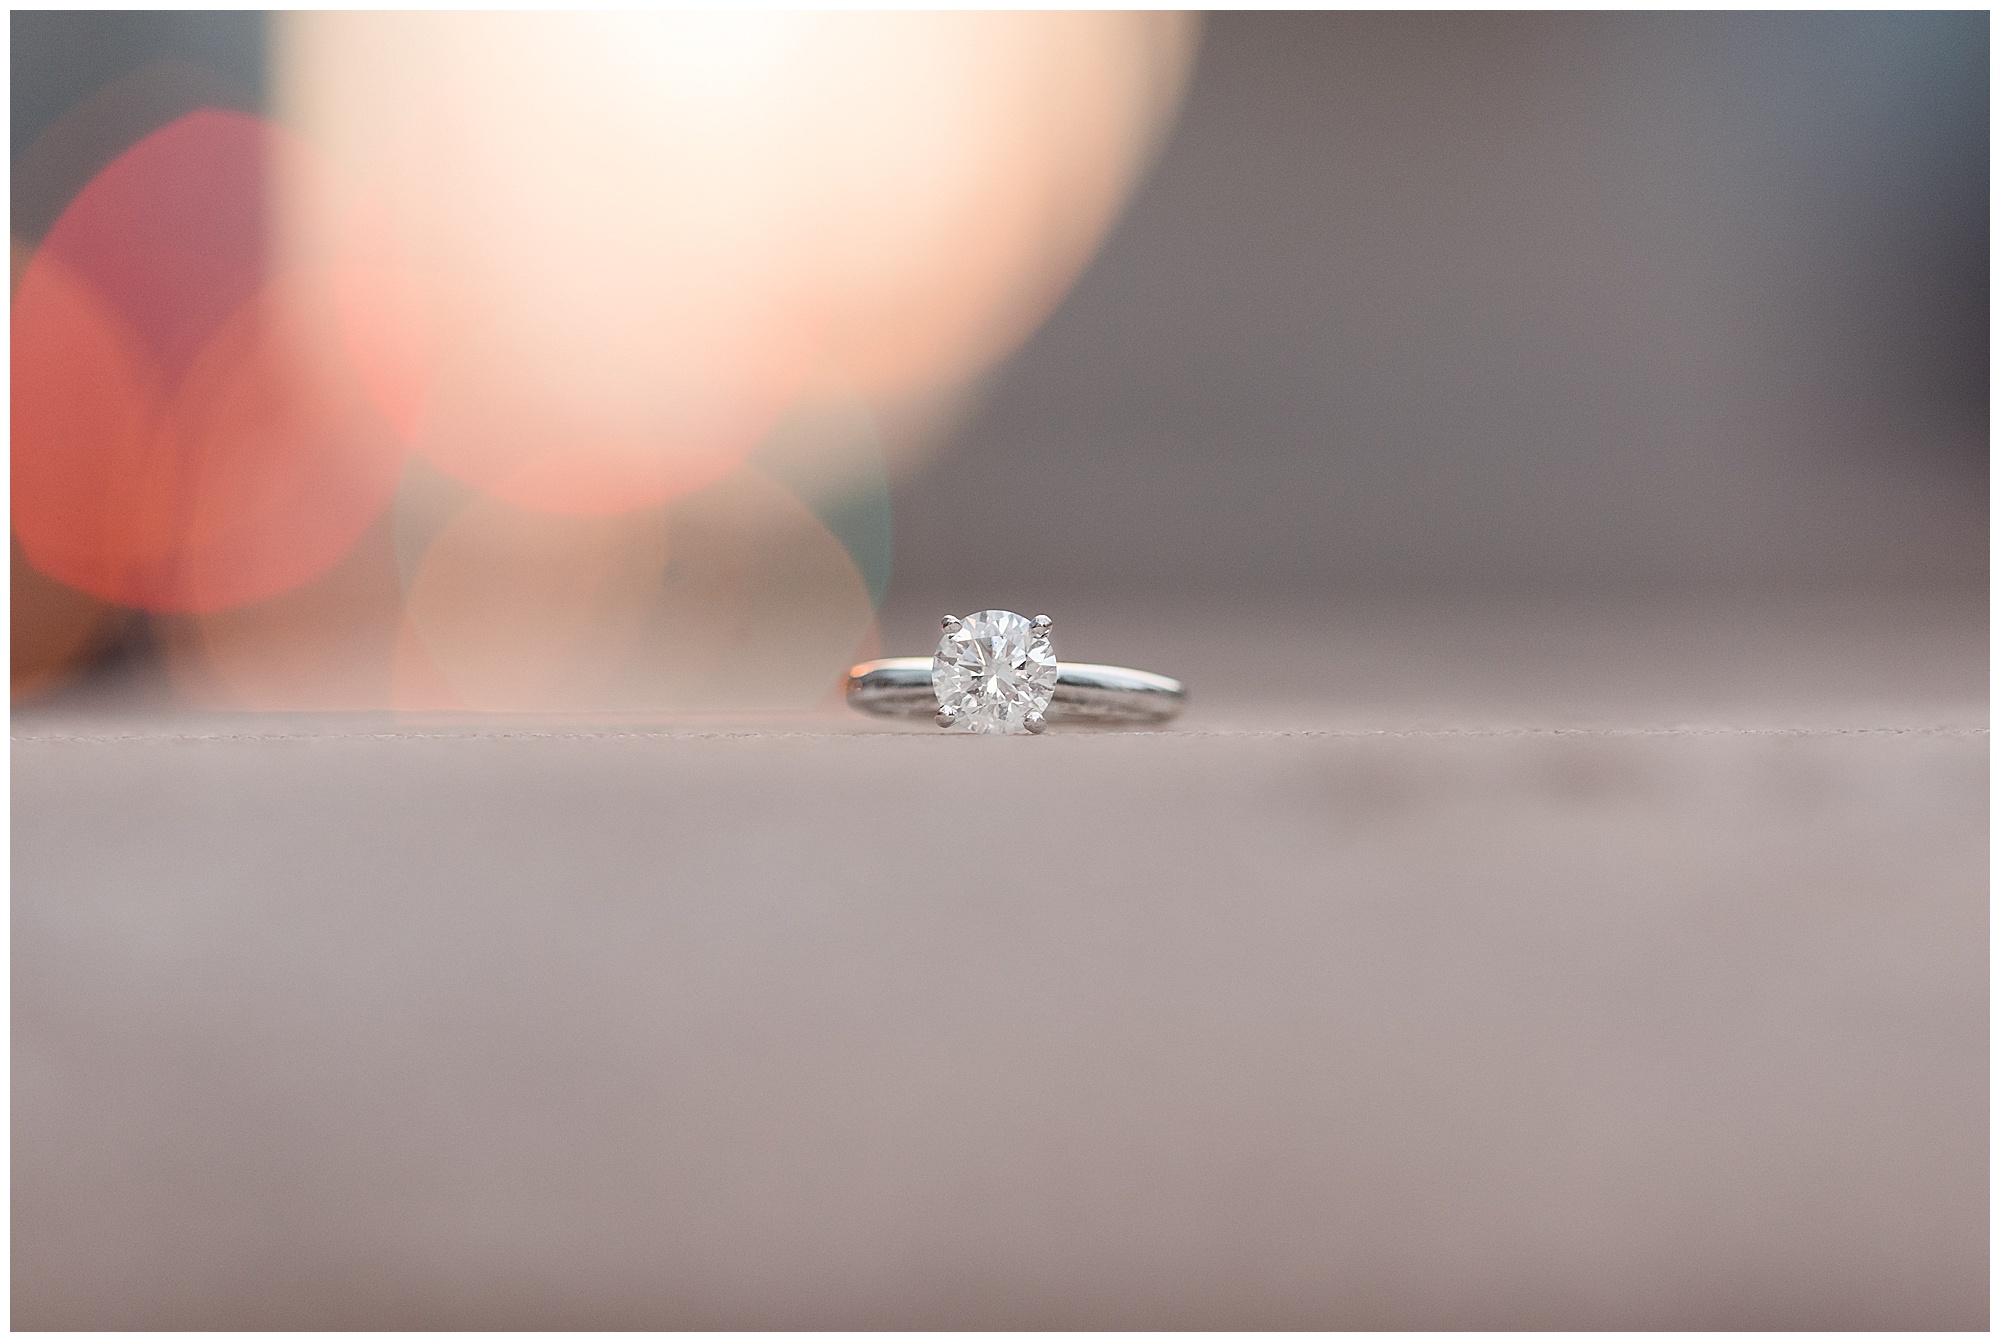 Sunset Engagement Ring Shot. 